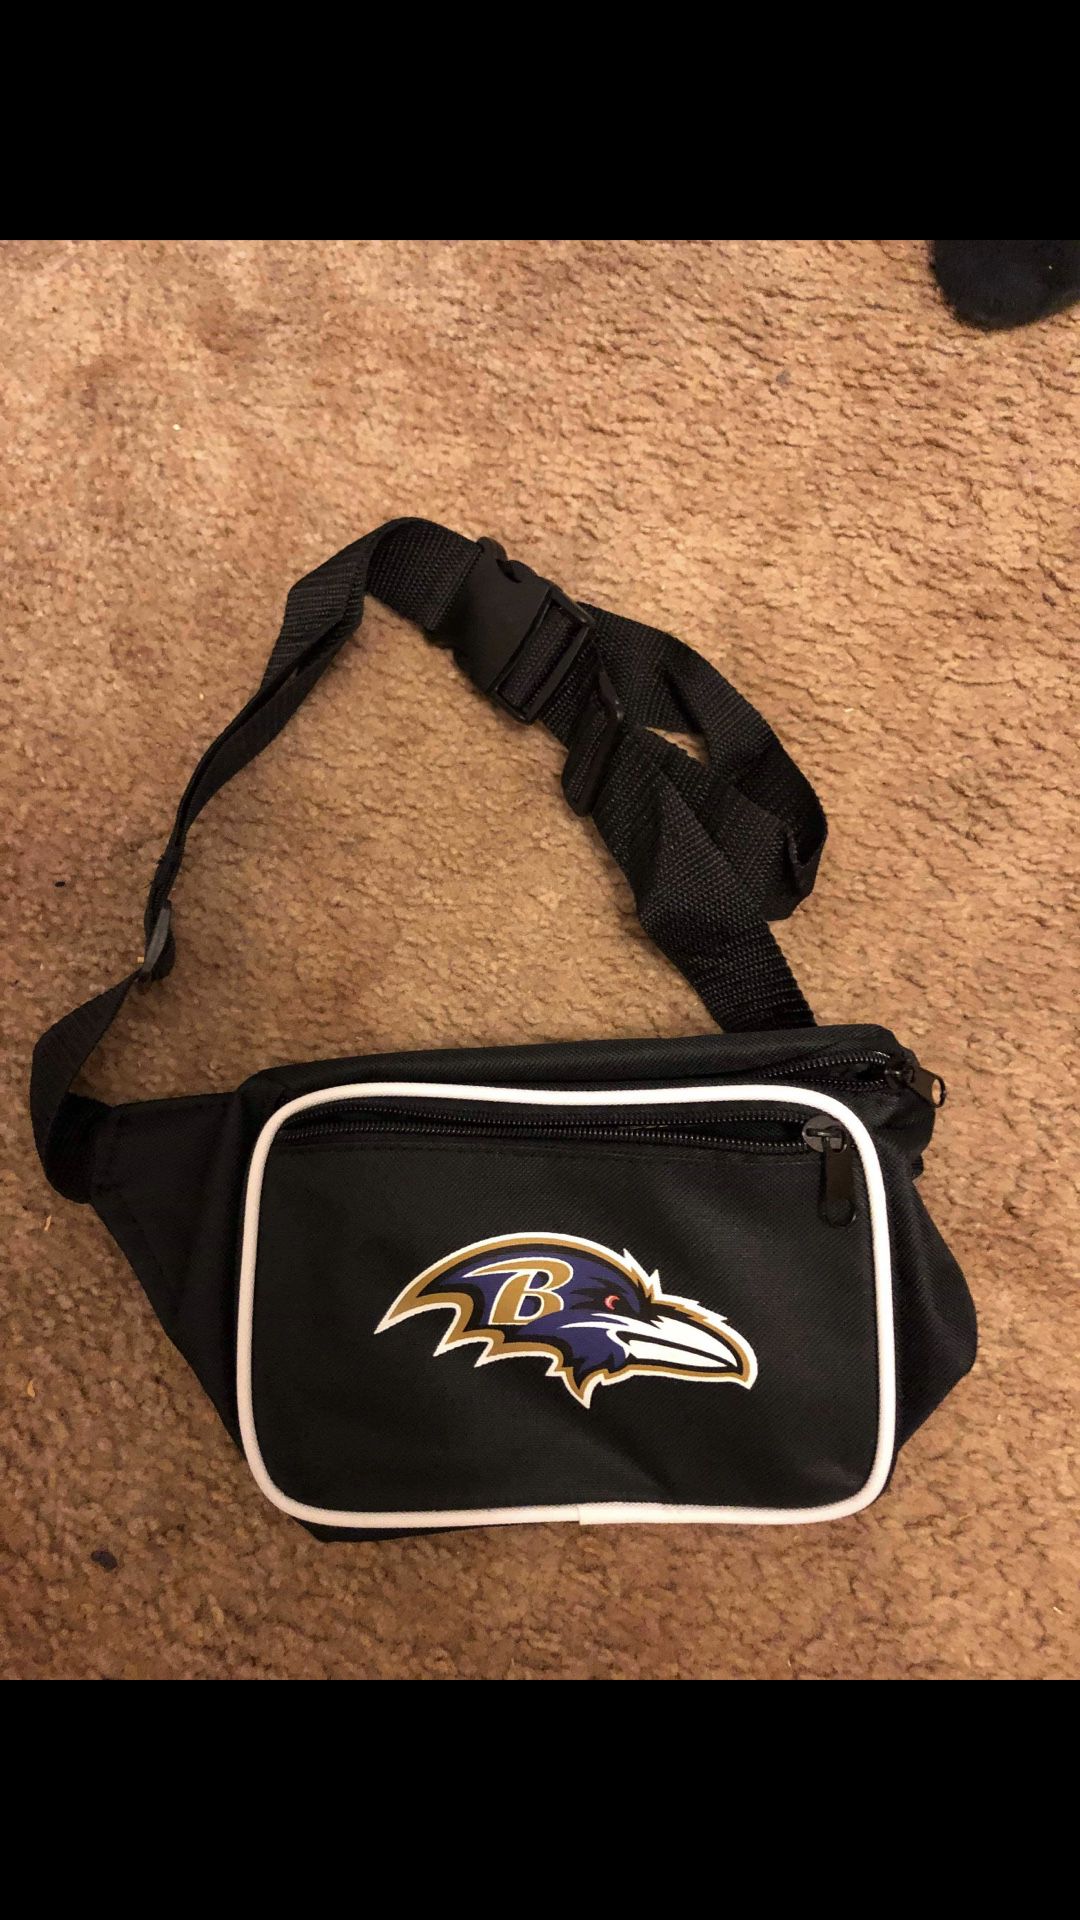 Ravens fanny pack